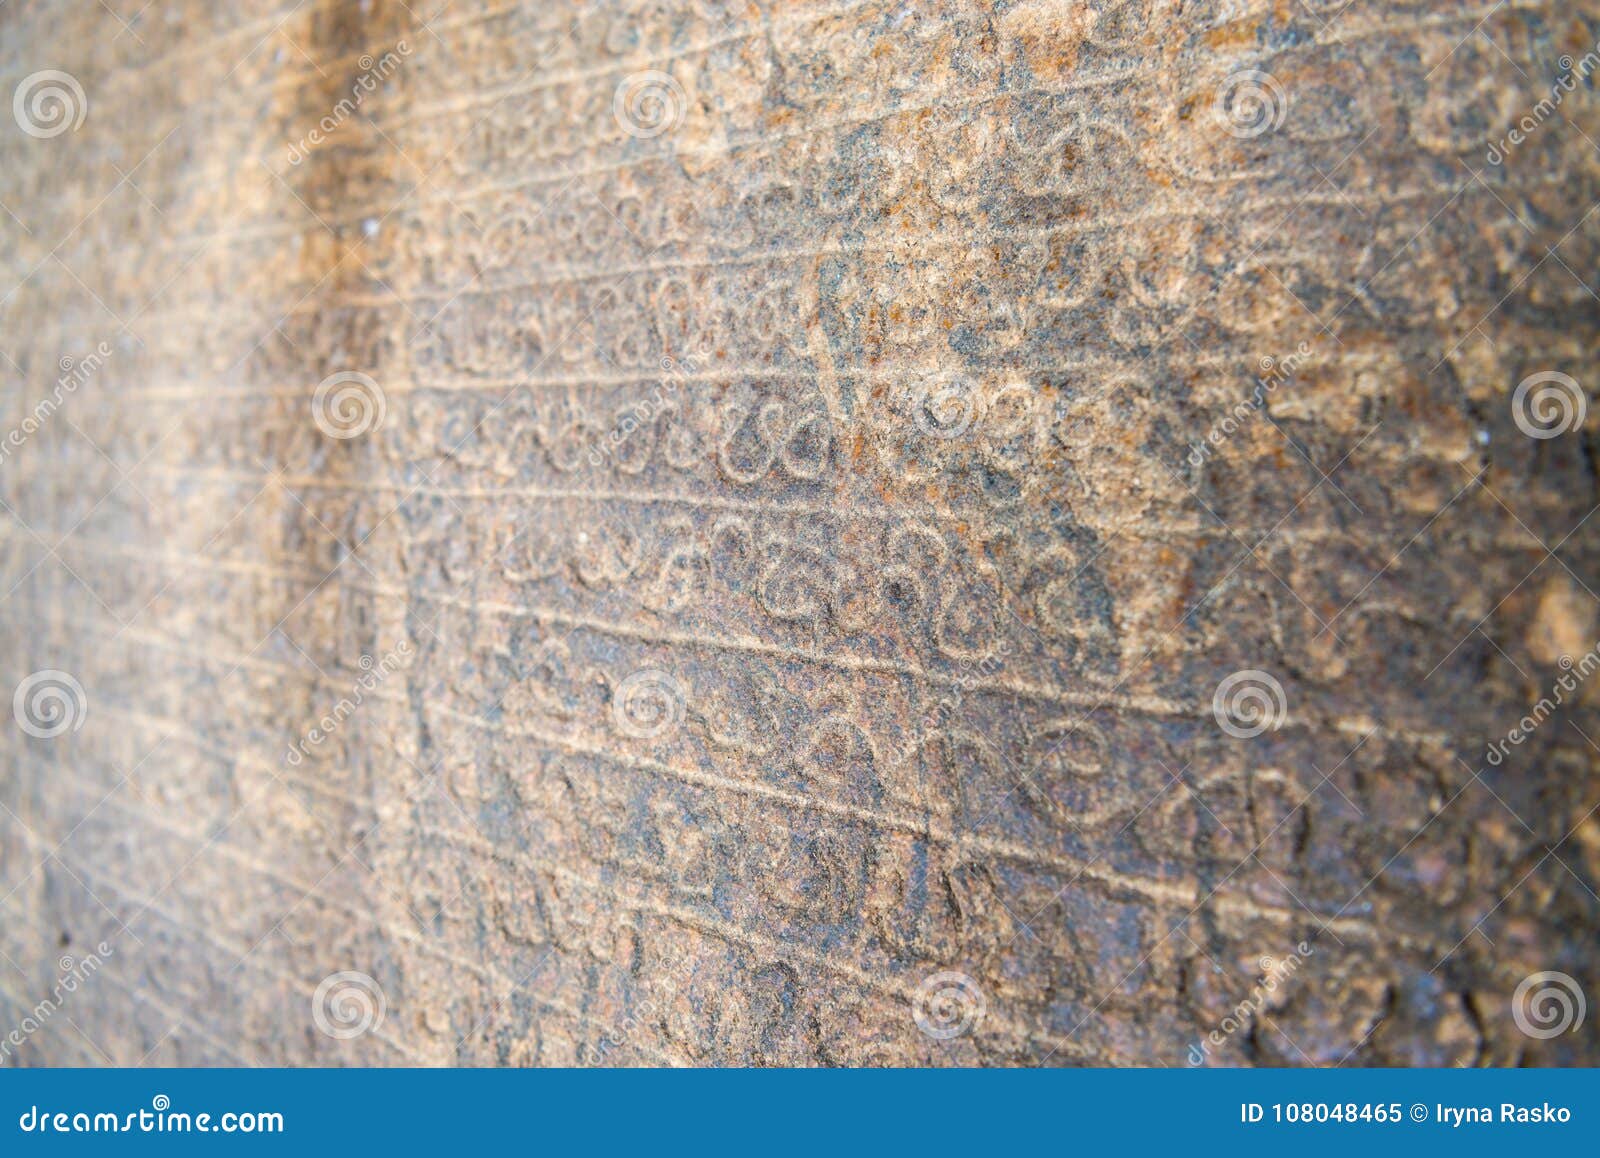 sinhala inscription on the flat stone surface